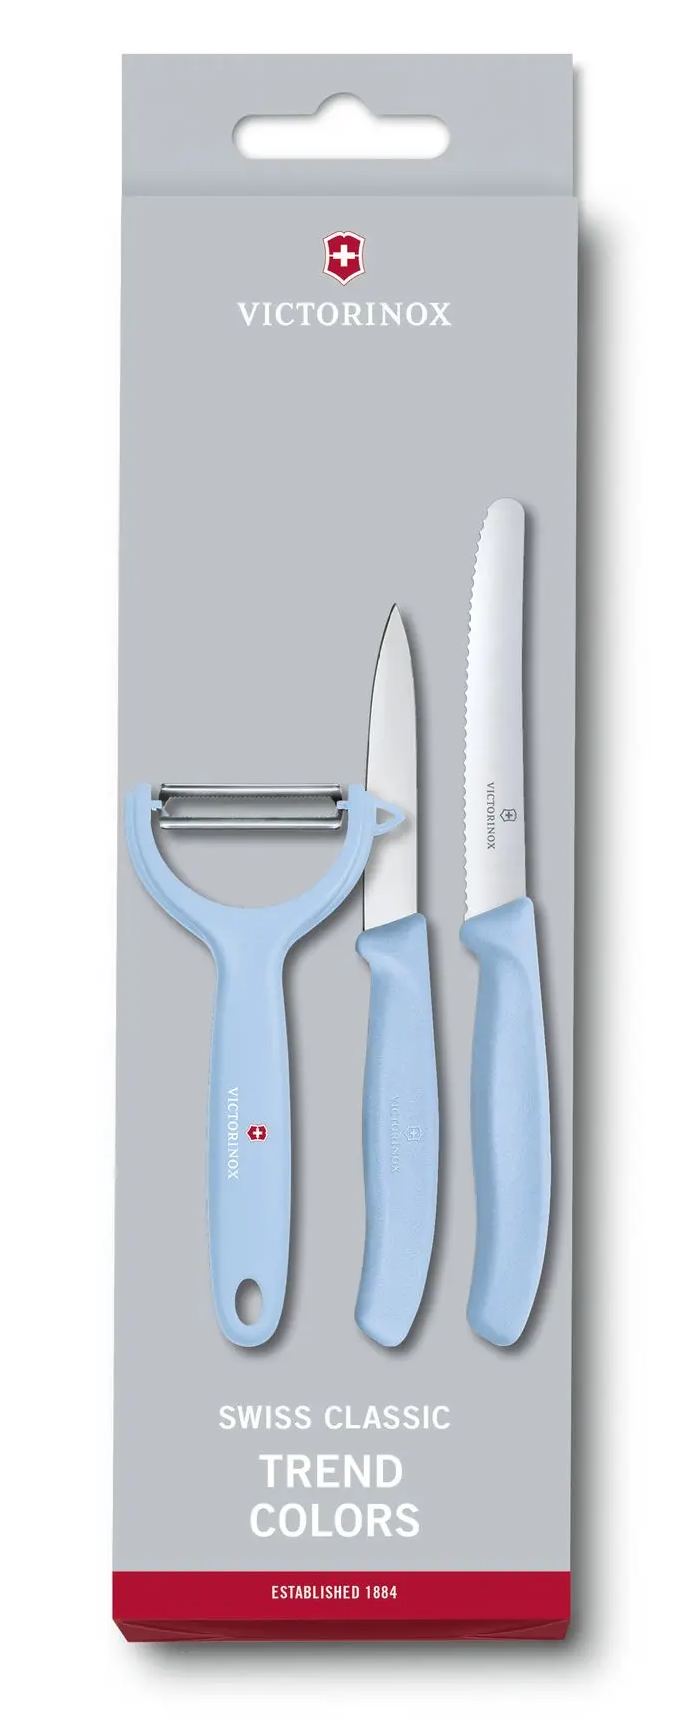 Victorinox Swiss Classic Trend Colors Paring Knife Set 3 Pieces Light Blue 6.7116.33L22